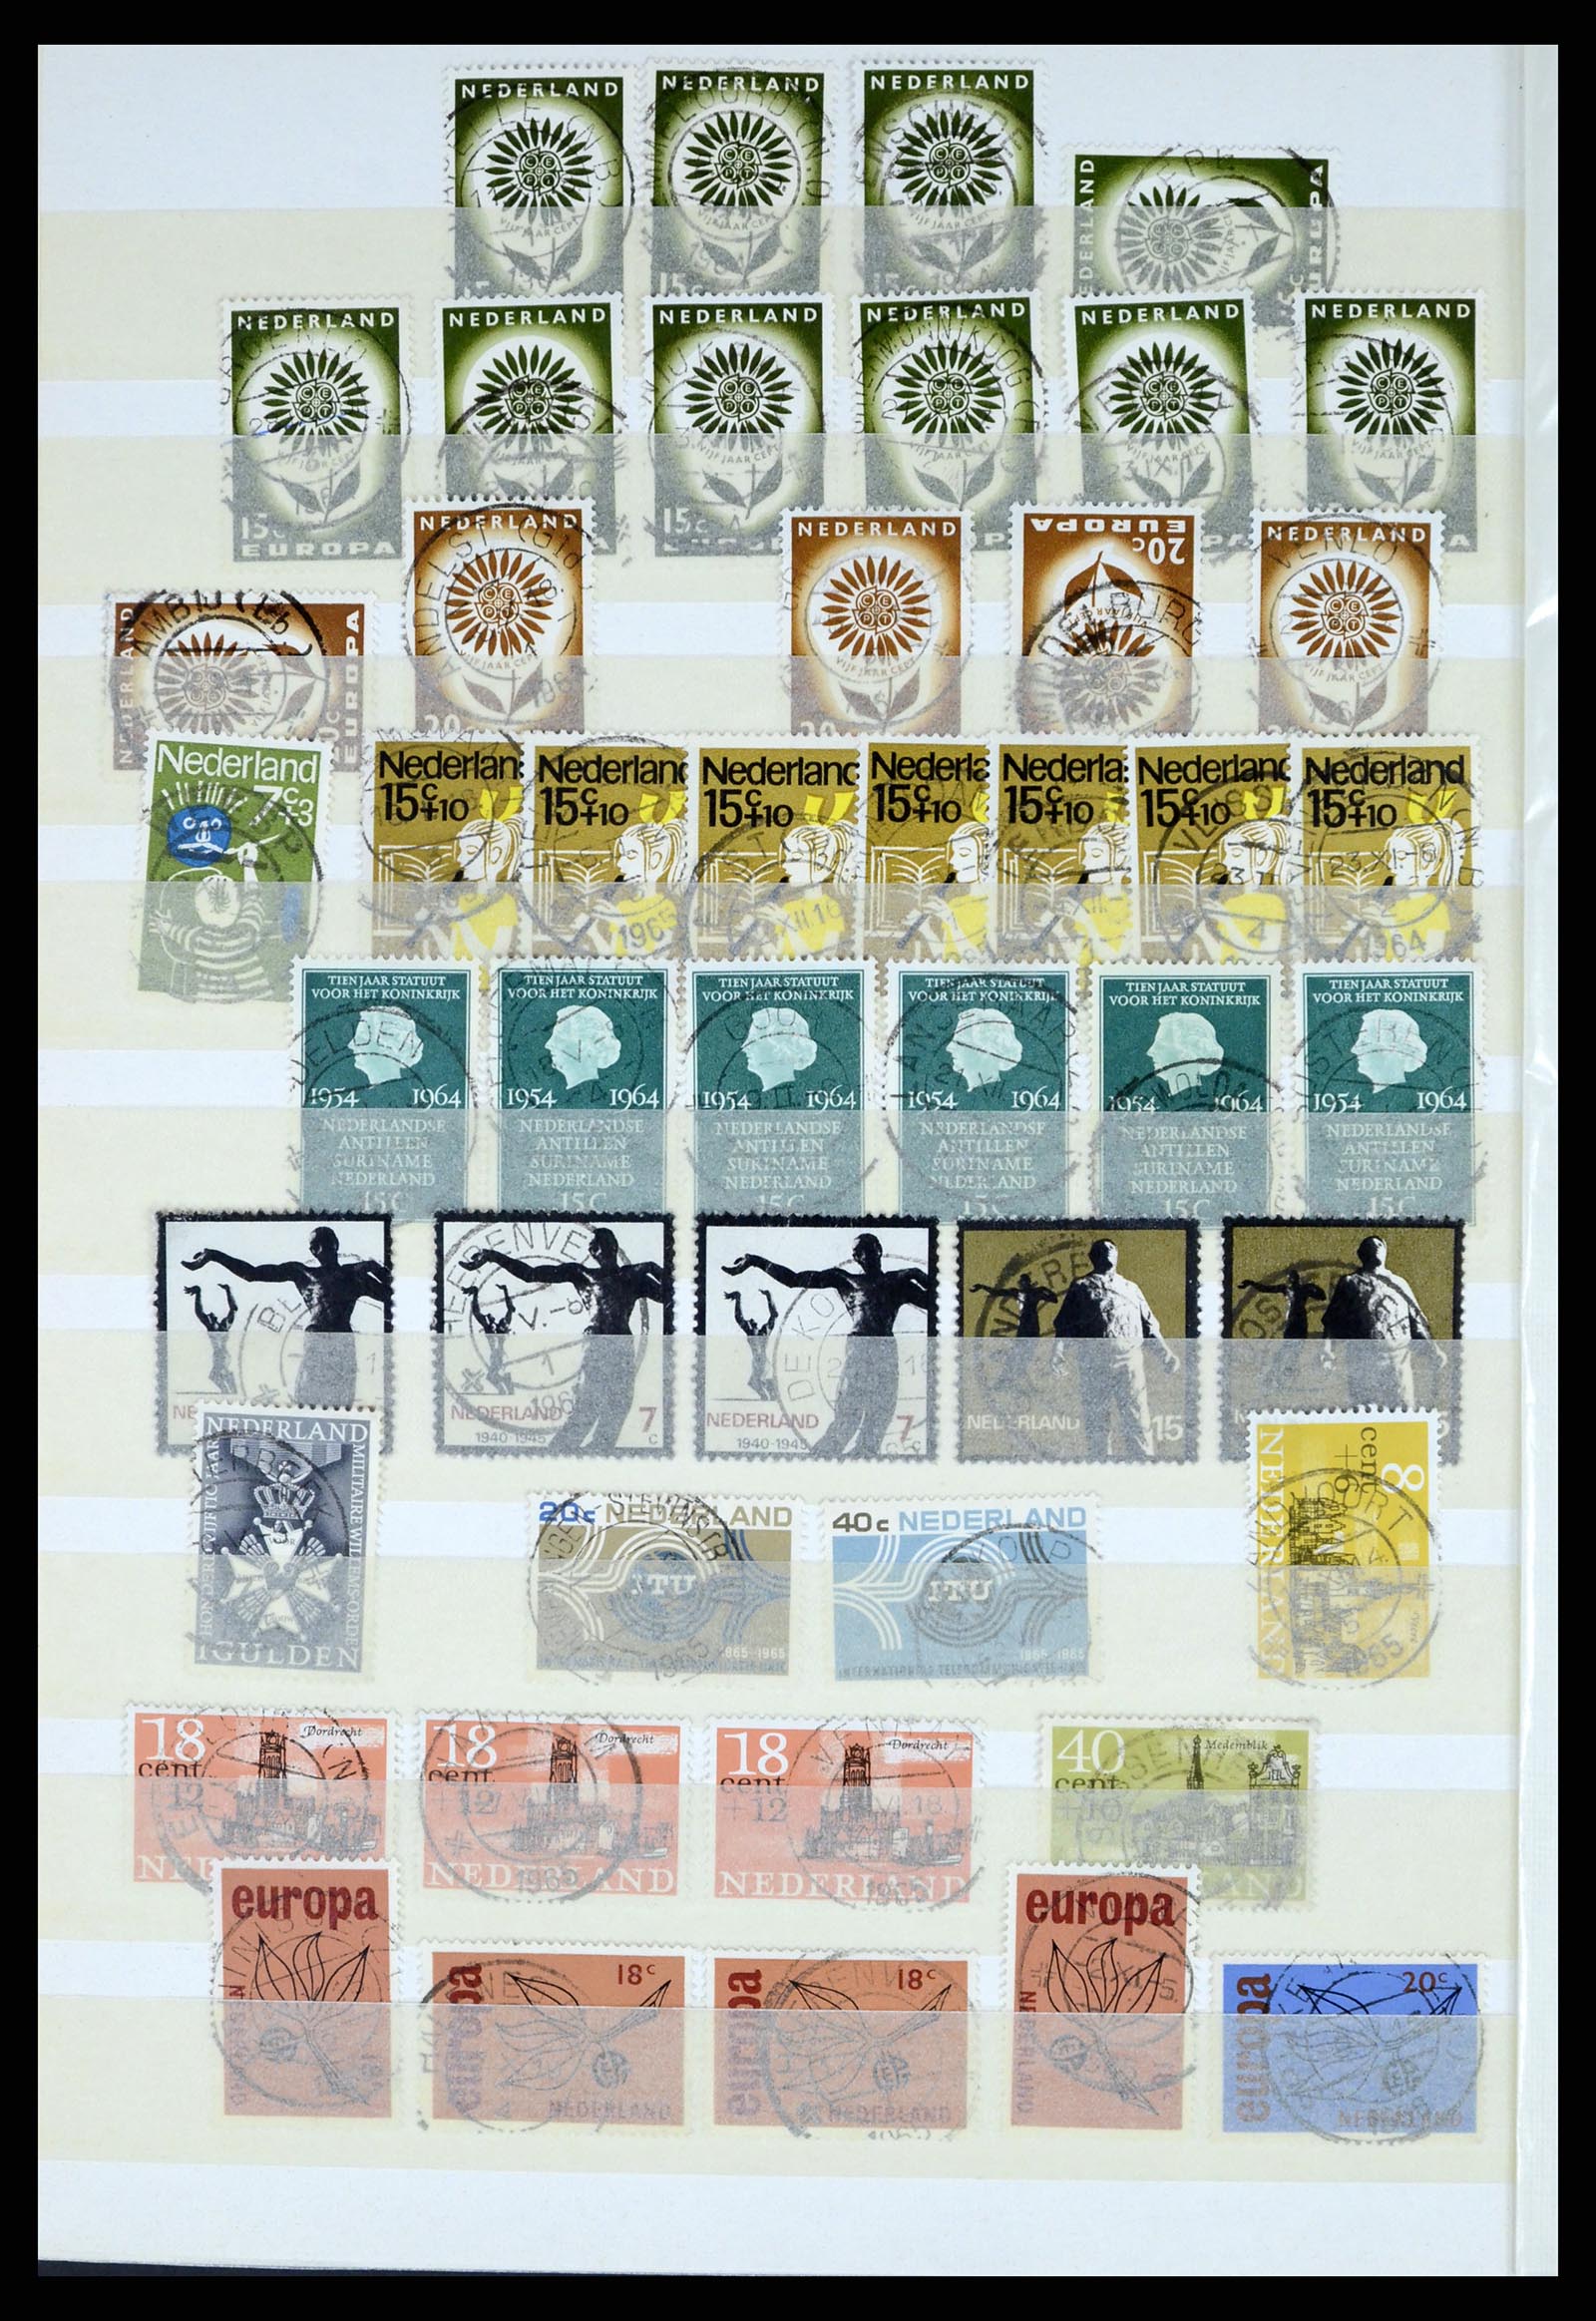 37424 058 - Stamp collection 37424 Netherlands shortbar cancels.